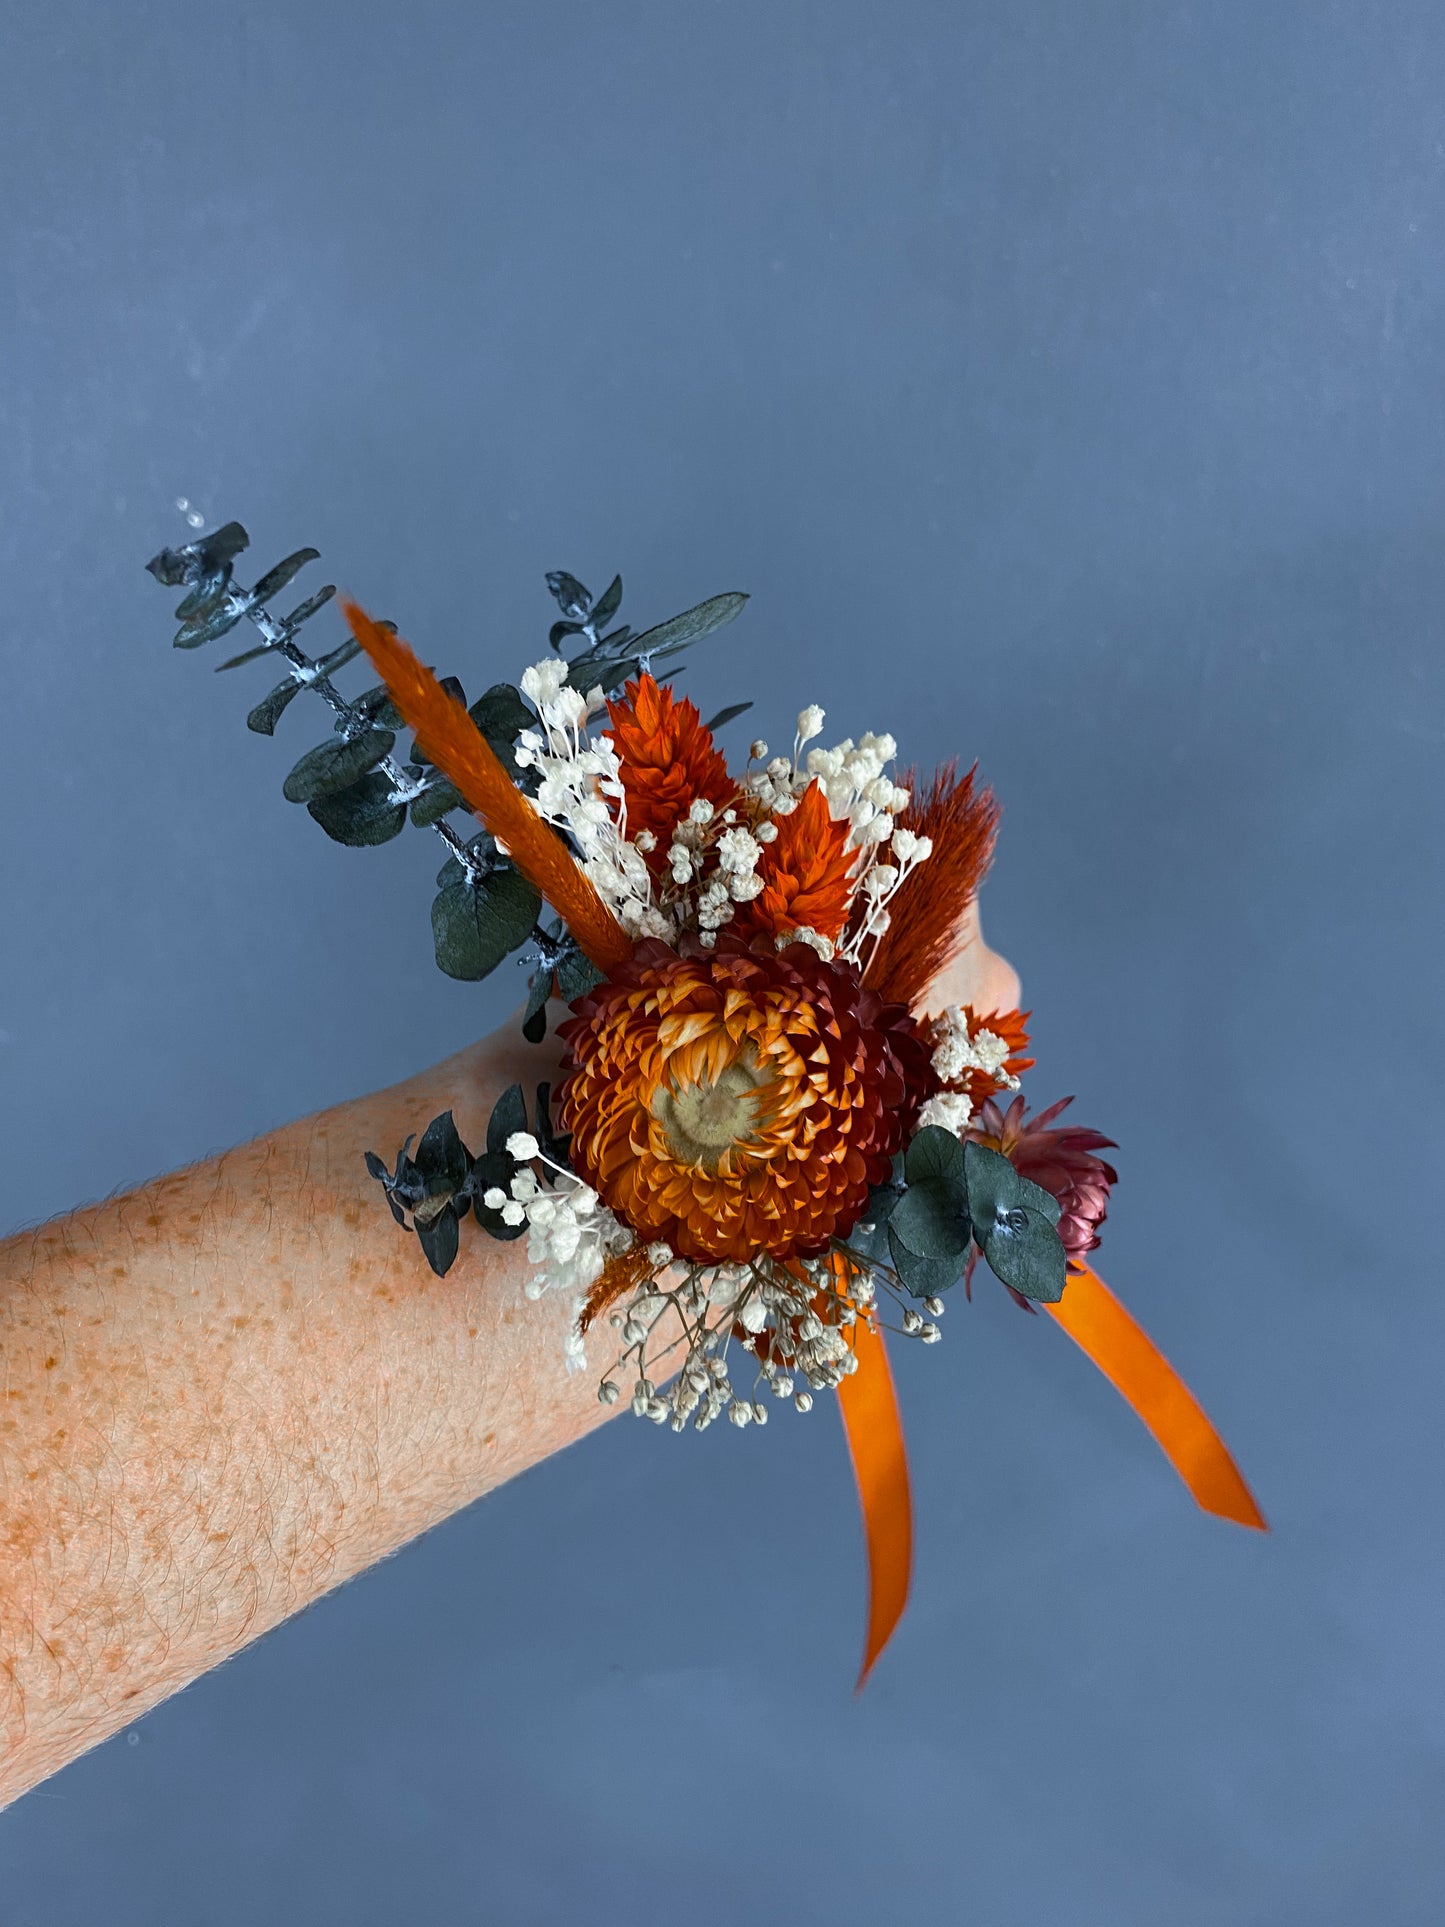 Mara dried flower wrist corsage